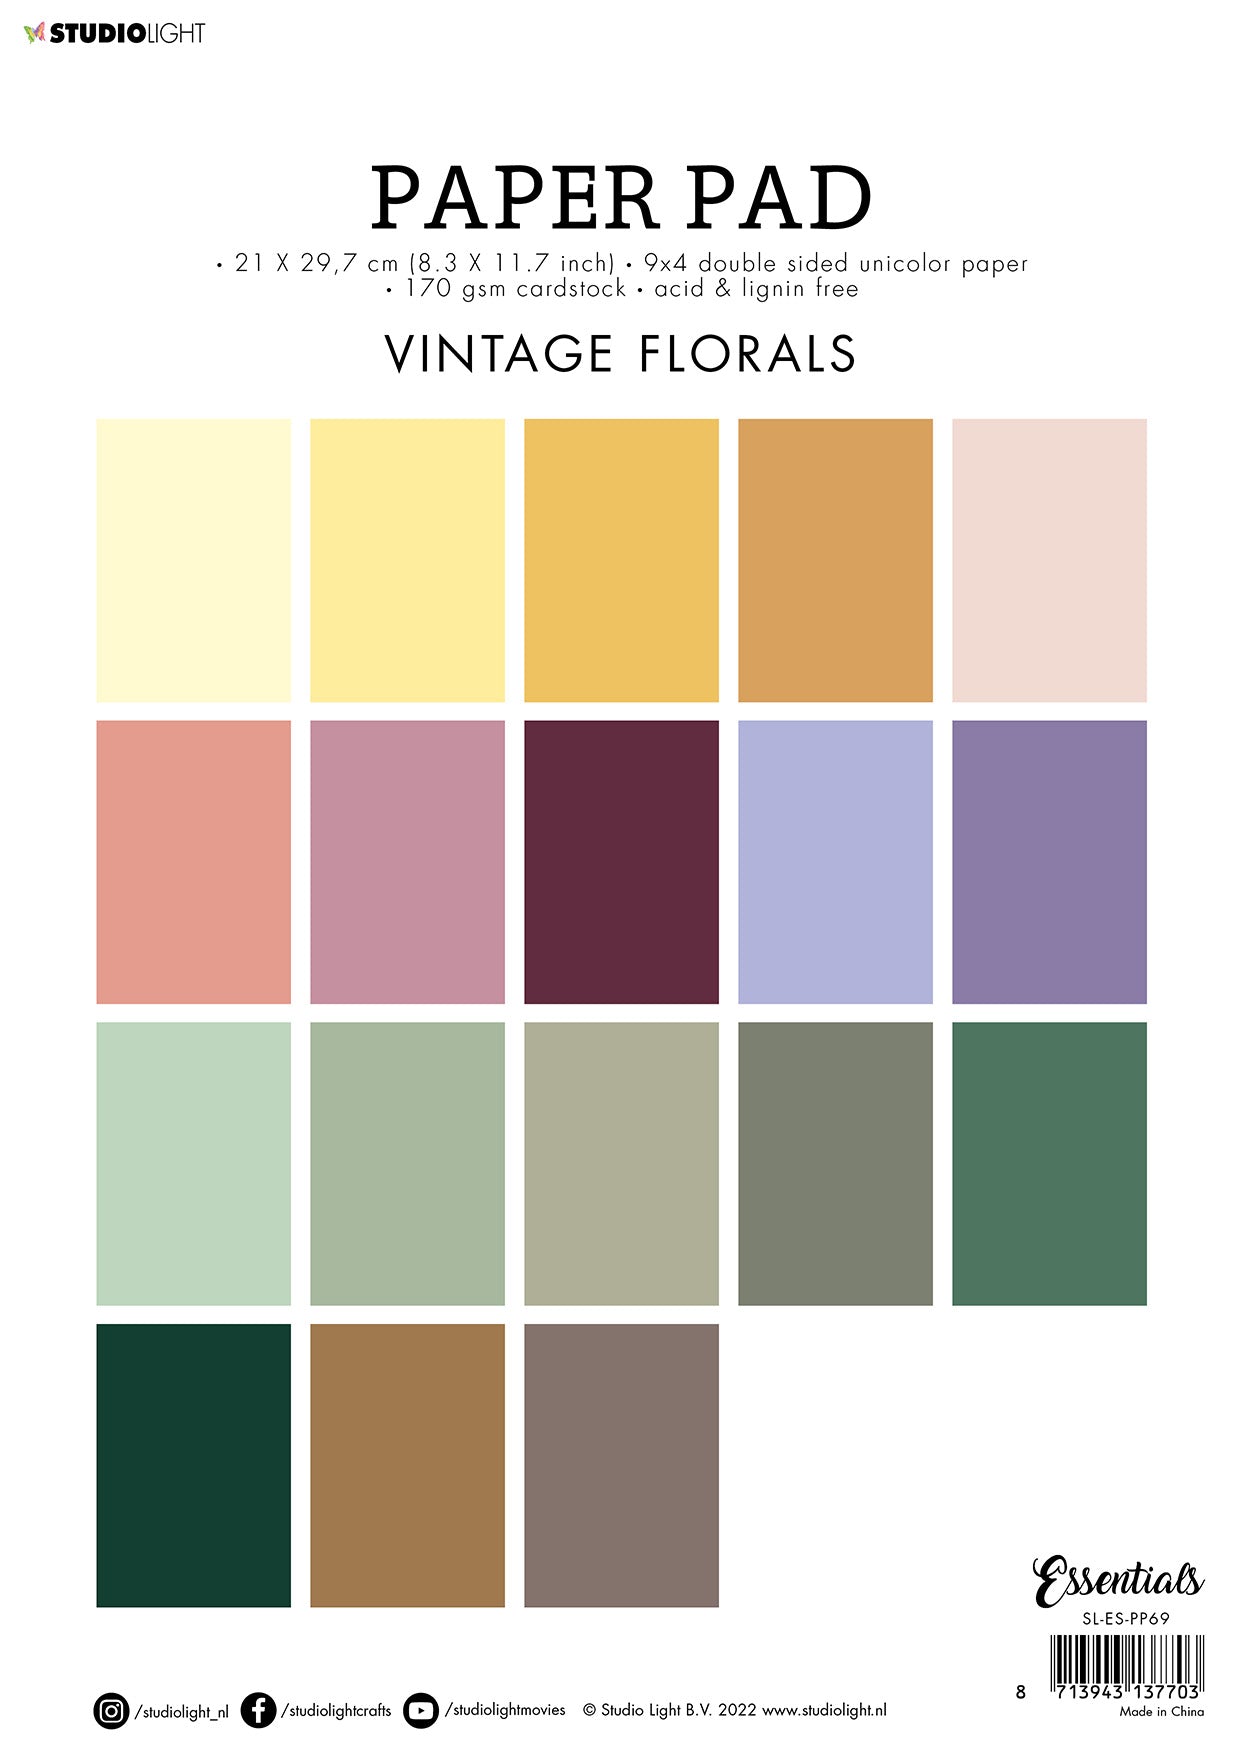 SL Paper Pad Double Sided Unicolor Vintage Florals Essentials 210x297x9mm 36 SH nr.69